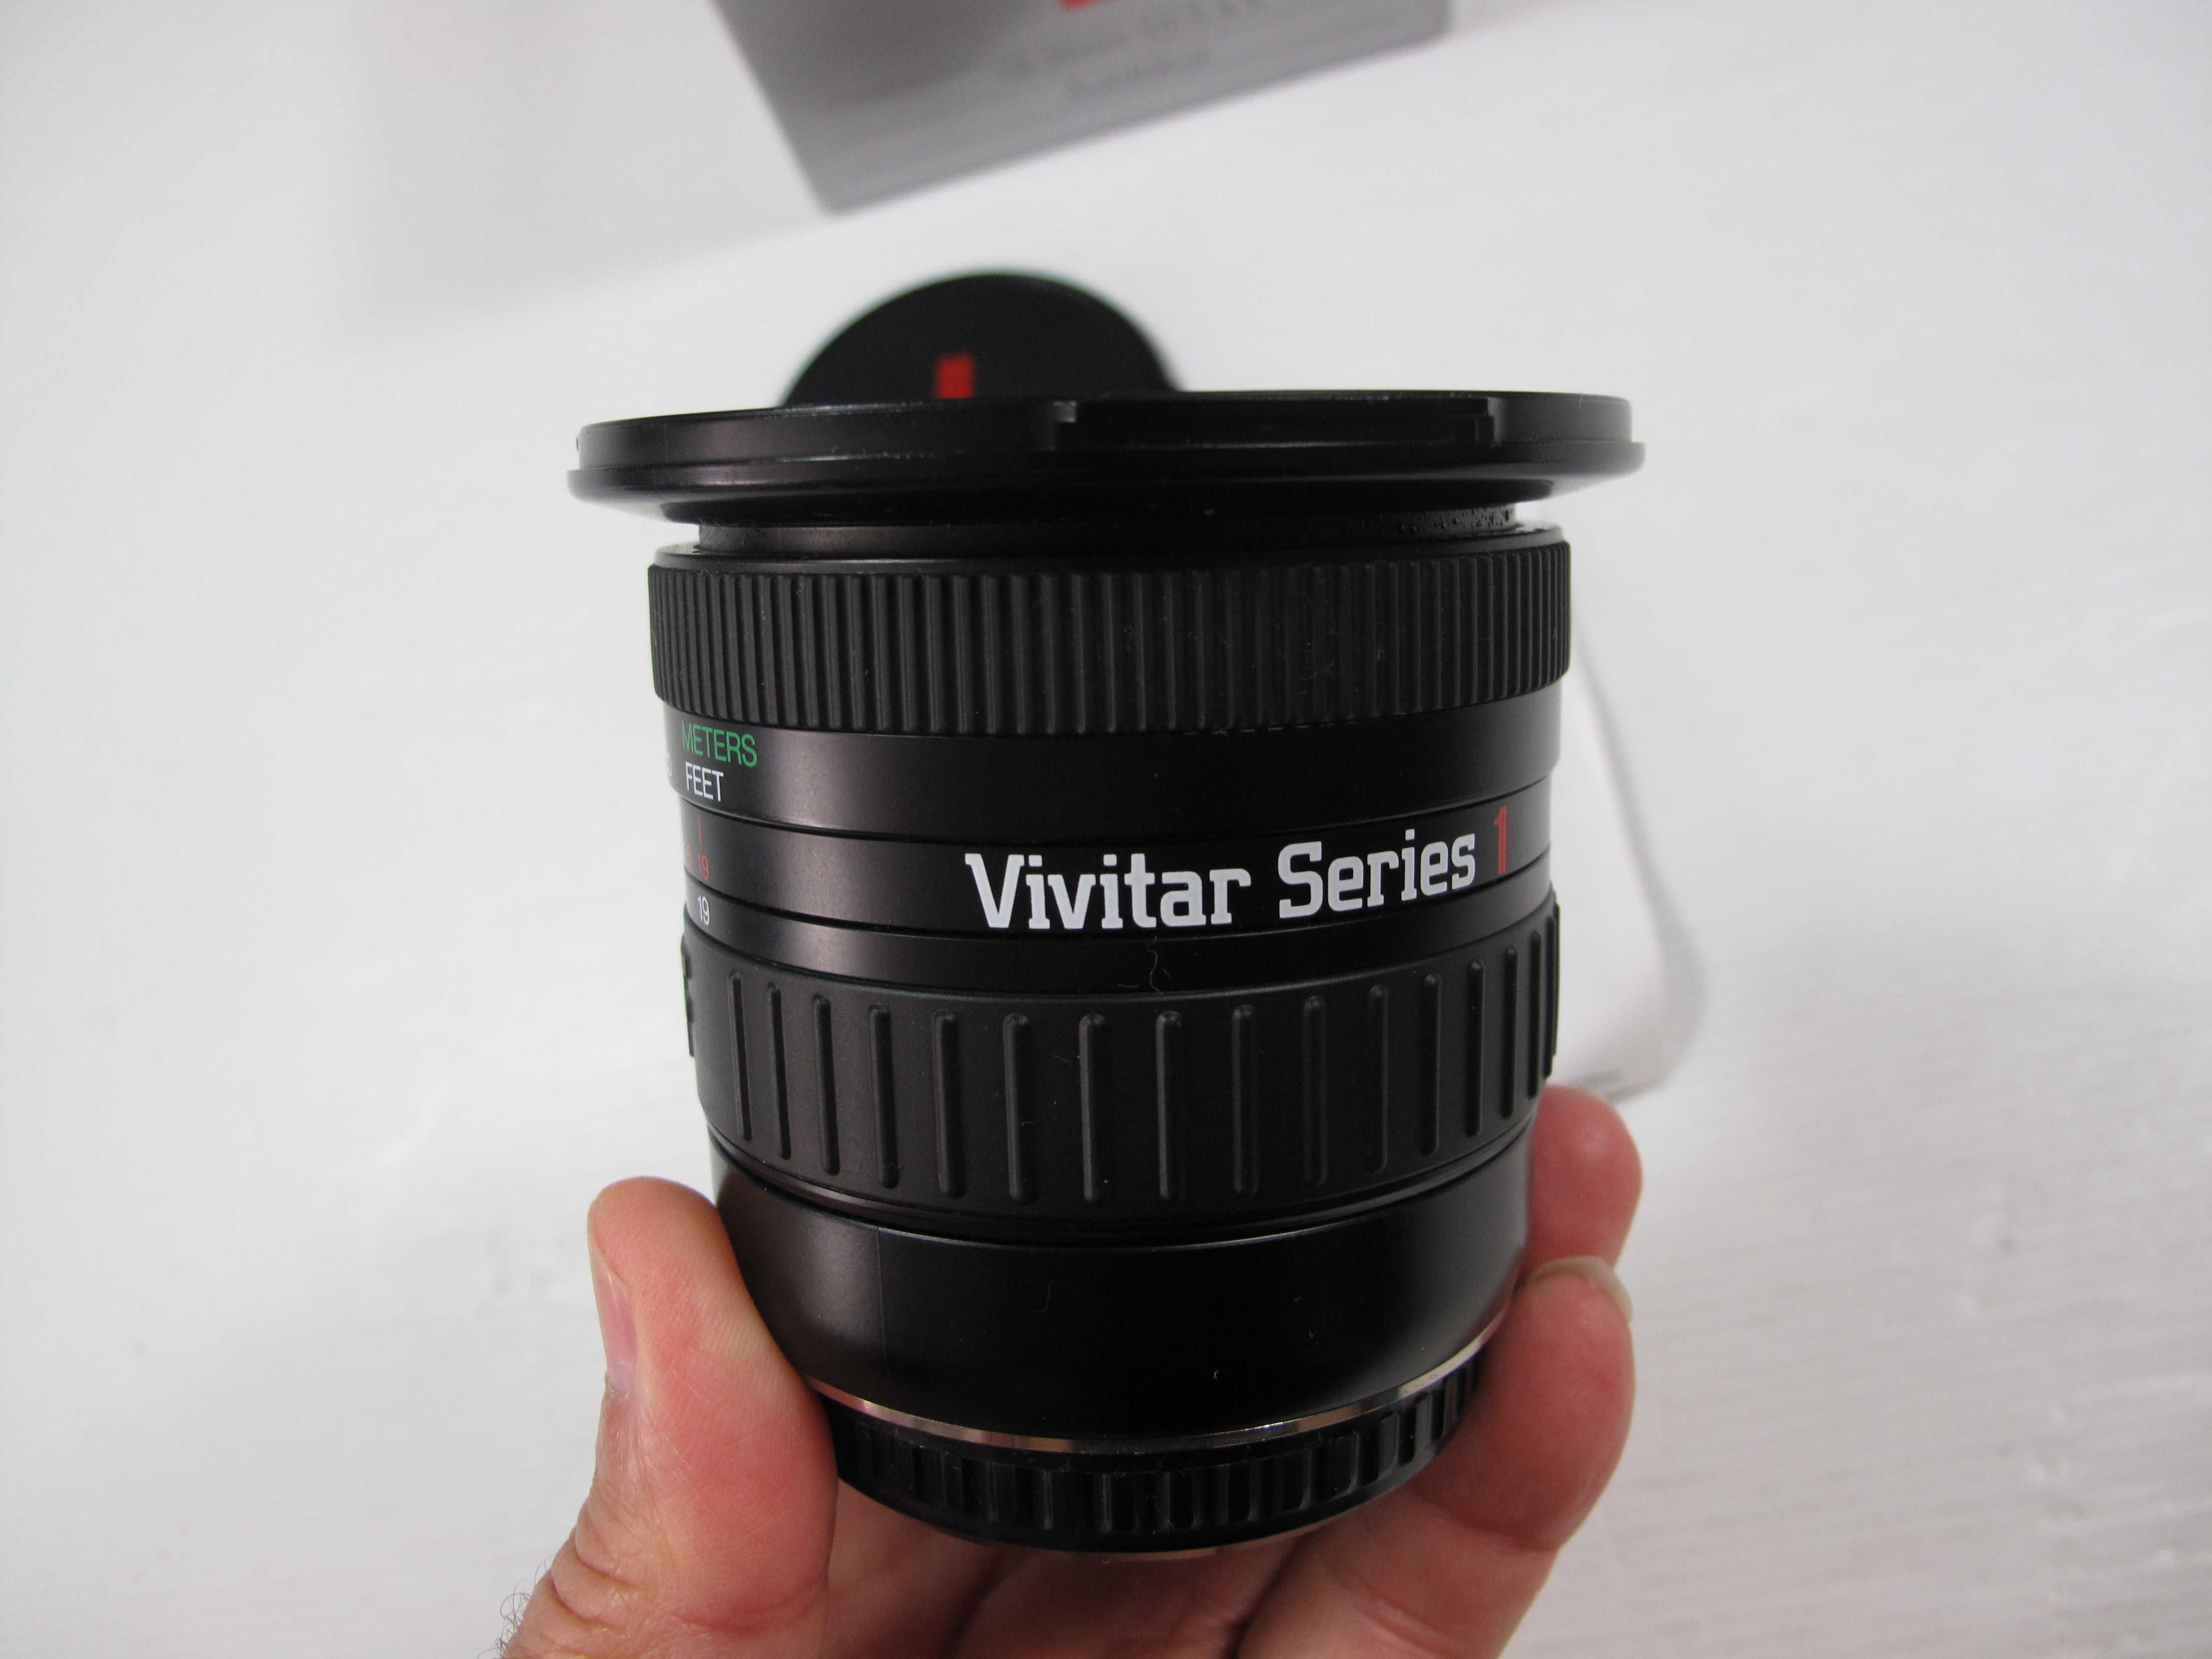 Canon /Vivitar 19-35mm na caixa quase sem uso